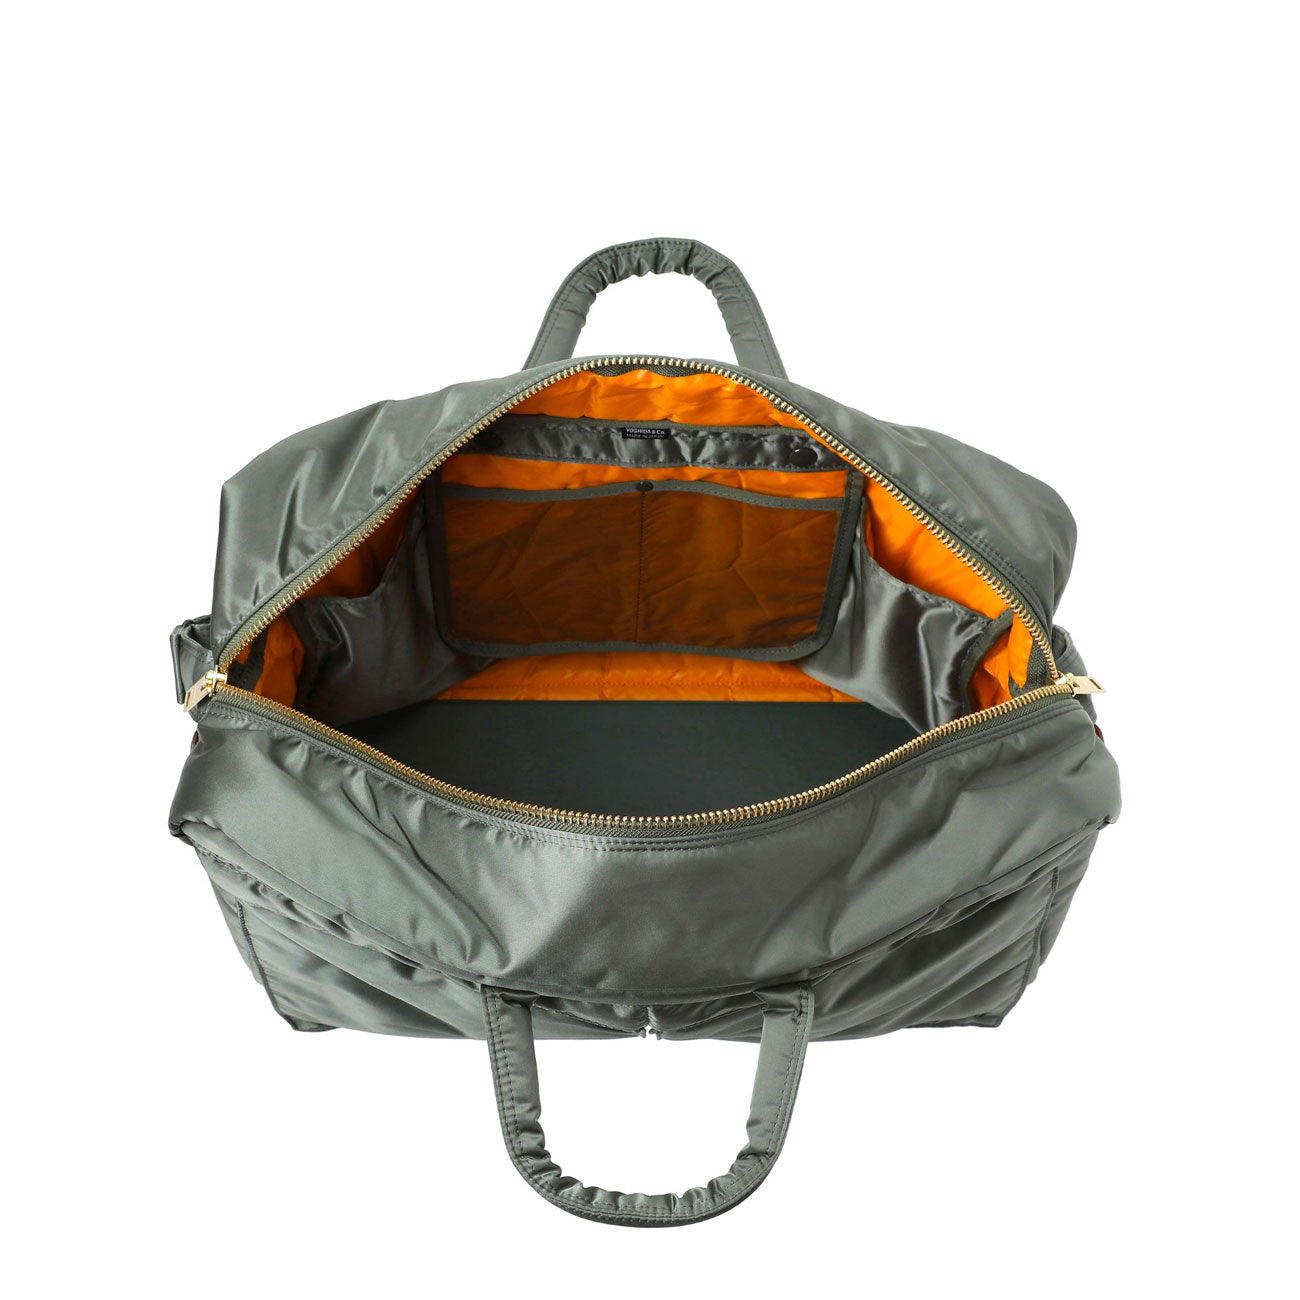 Porter by Yoshida Tanker 2Way Duffle Bag S (Grün)  - Allike Store